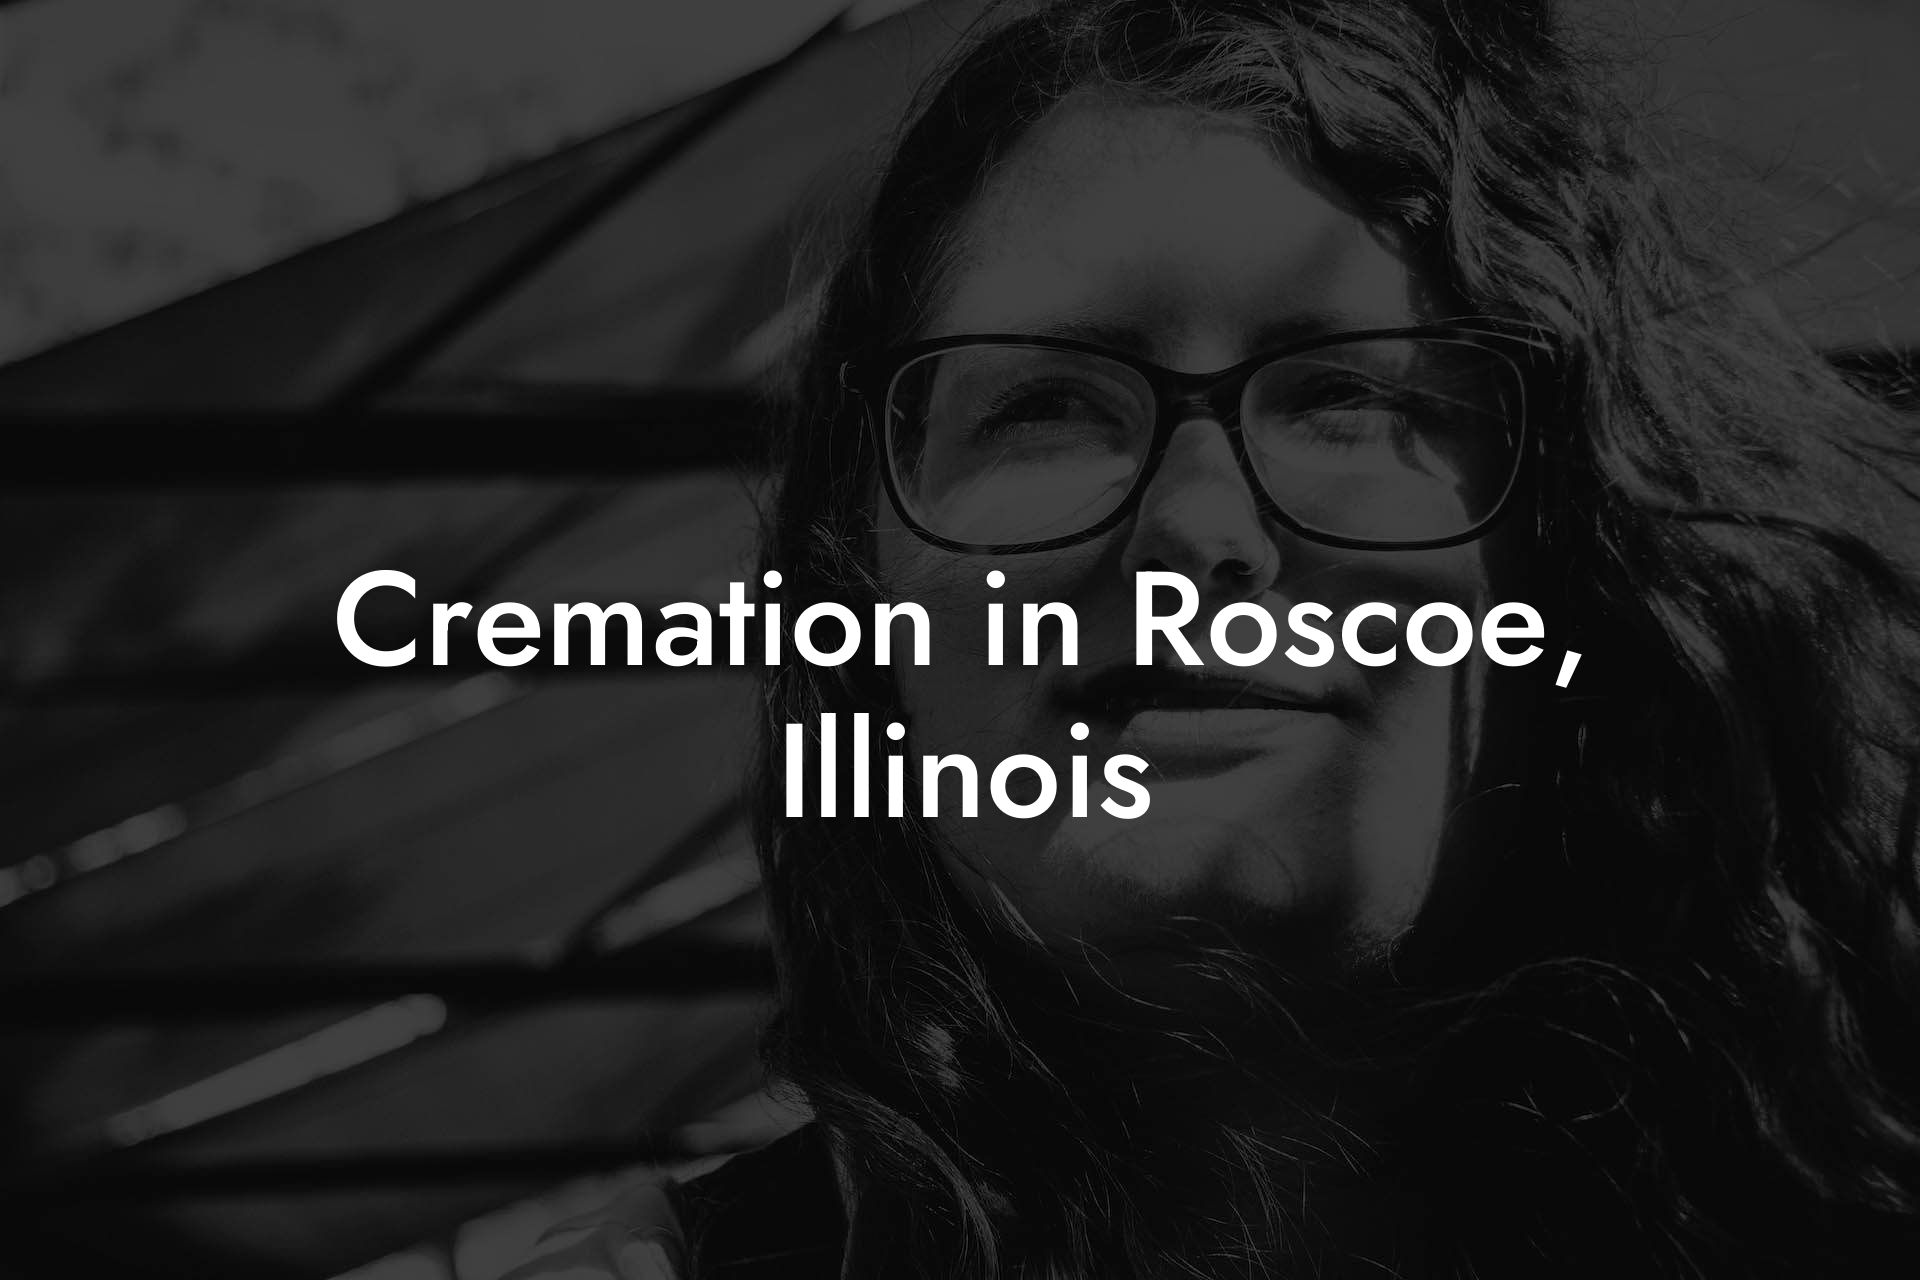 Cremation in Roscoe, Illinois